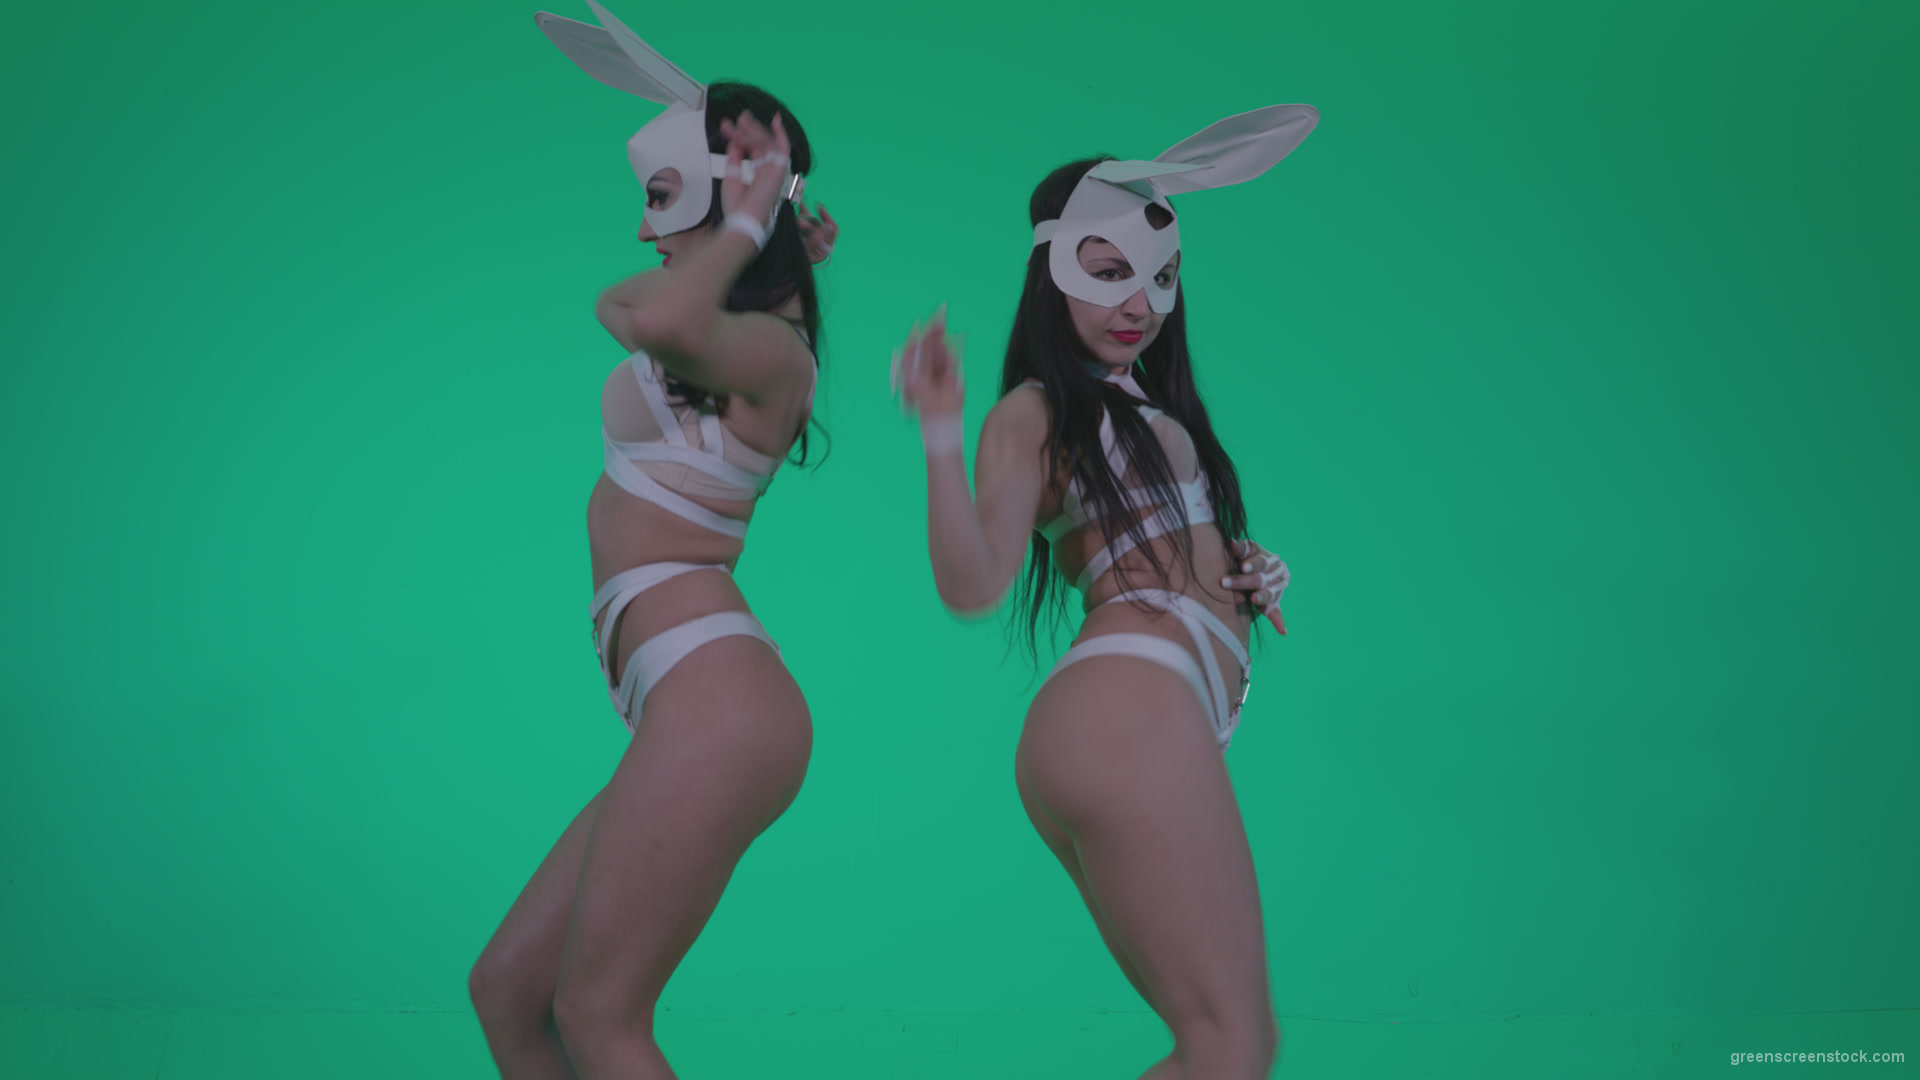 Go-go-Dancer-White-Rabbit-m6-Green-Screen-Video-Footage_002 Green Screen Stock